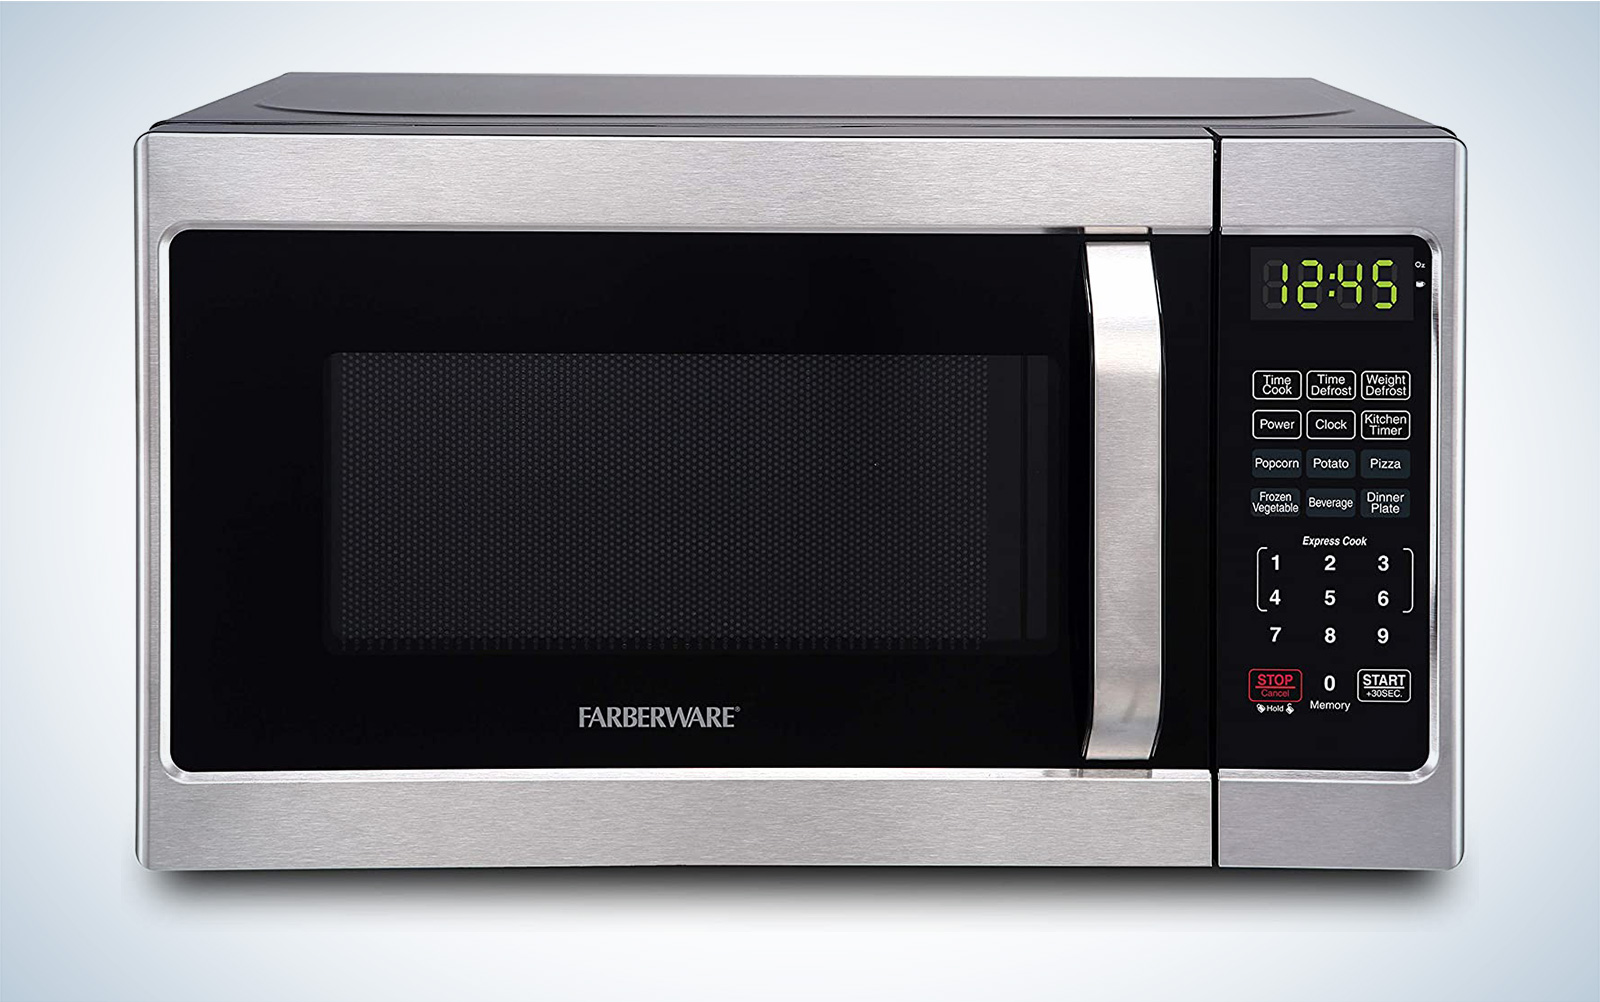 https://www.popsci.com/uploads/2023/03/13/best-countertop-microwaves-farberware-classic-microwave-oven.jpg?auto=webp